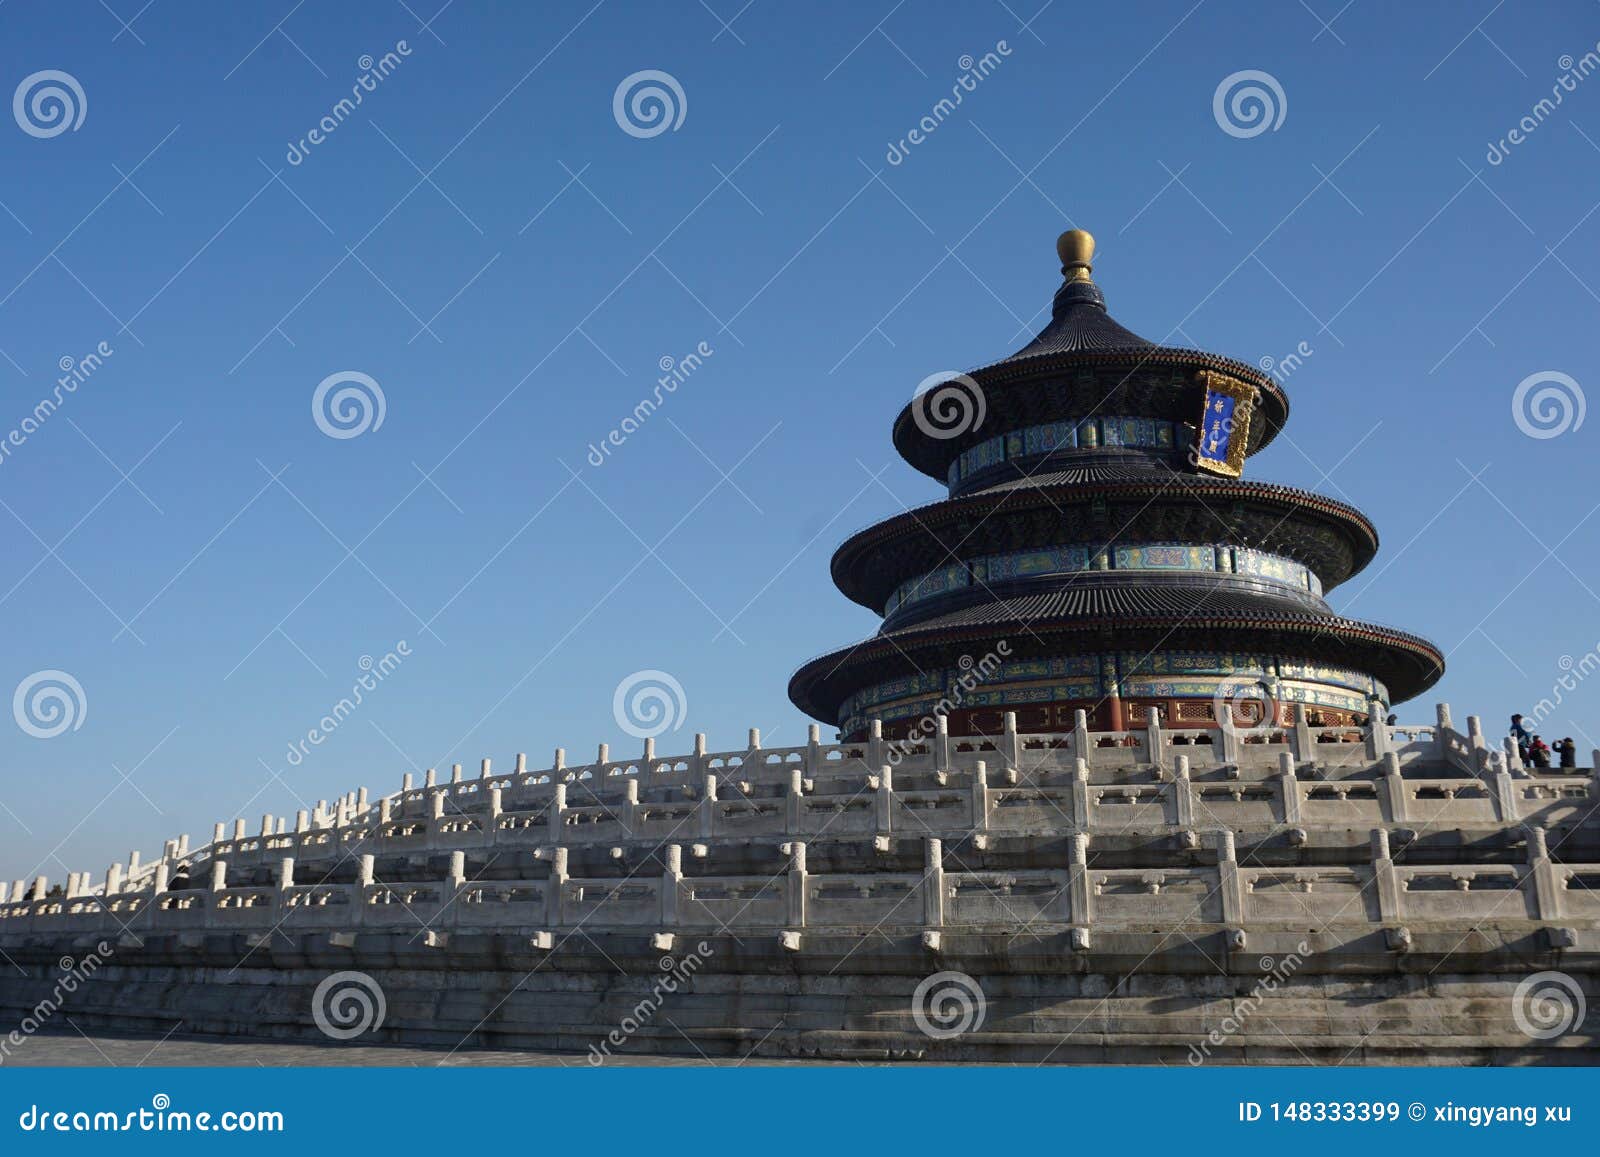 Beijing tiantang stock image. Image of temple, china - 148333399